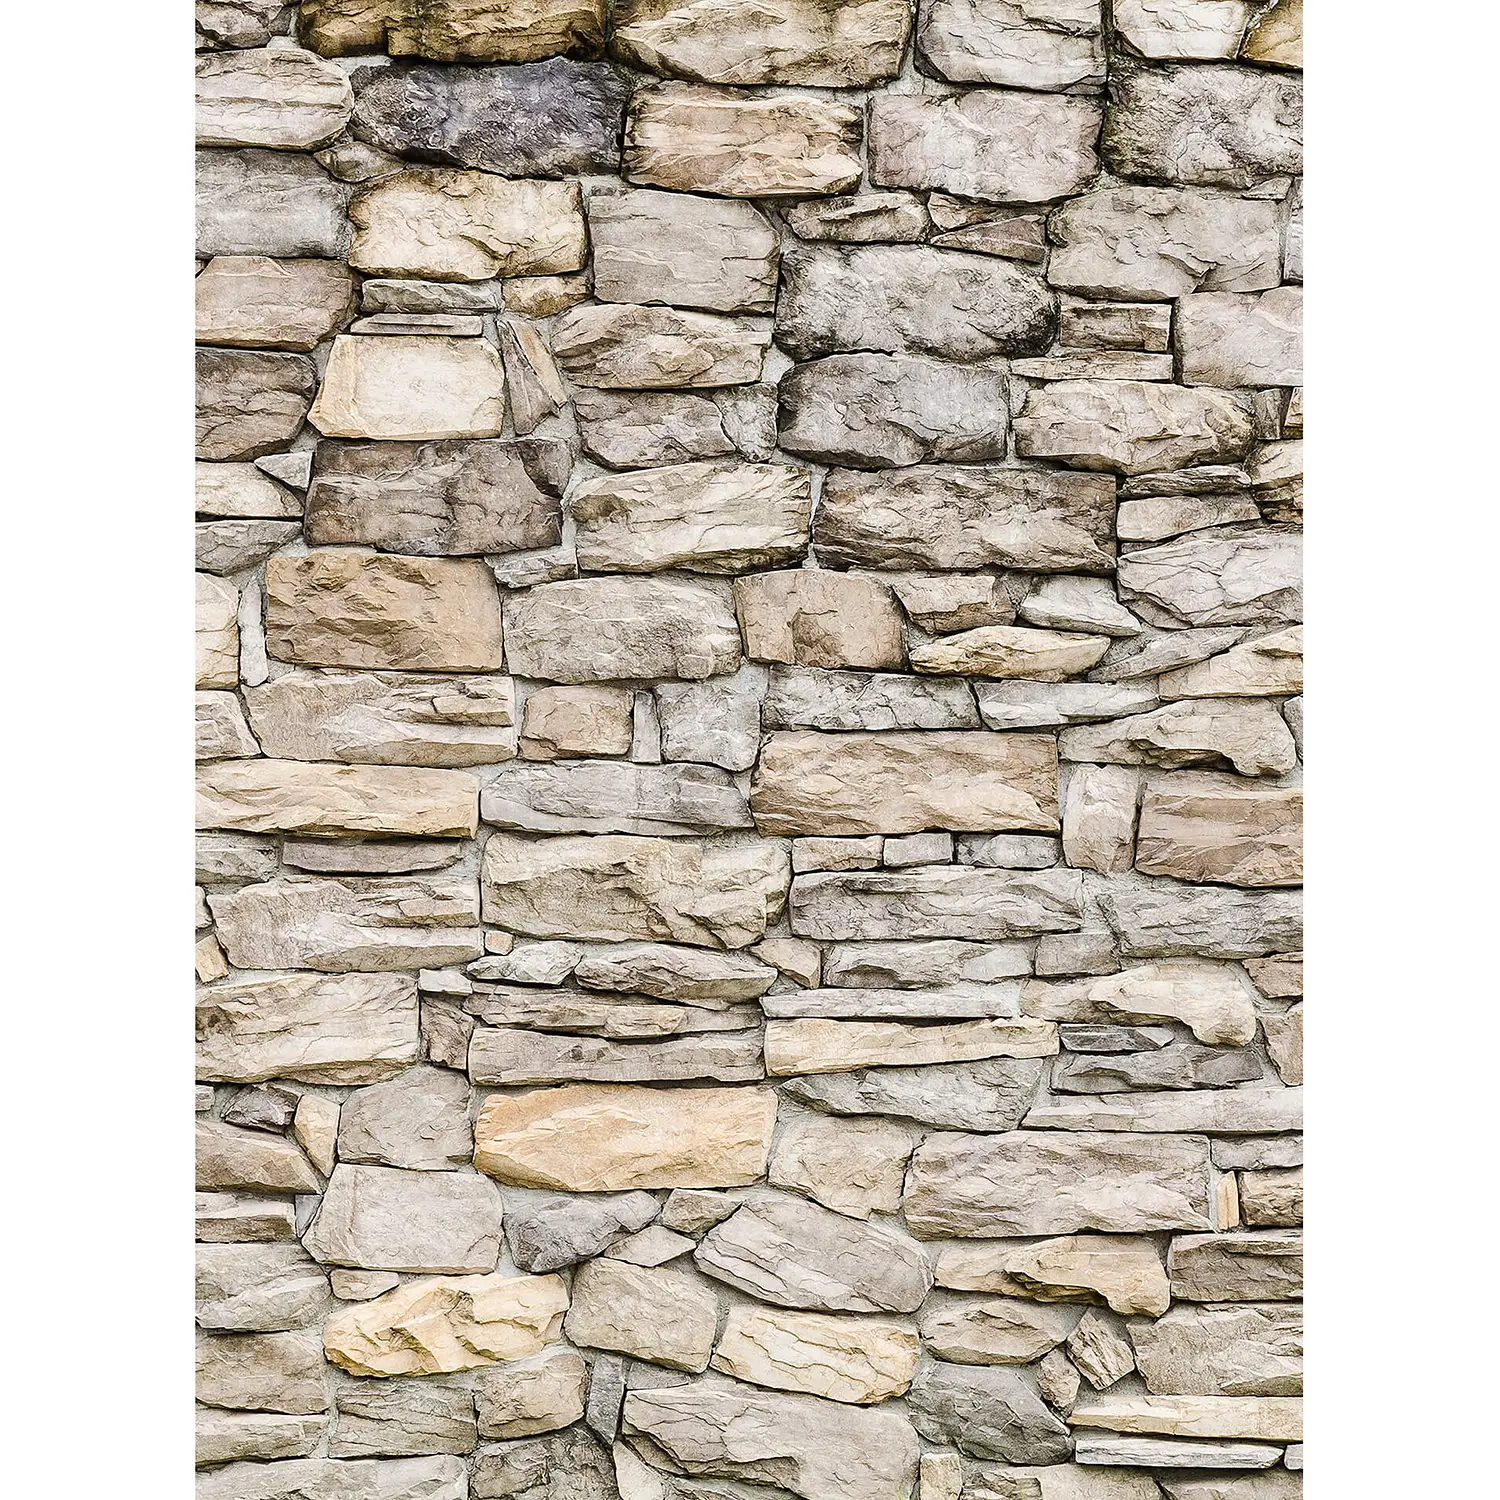 Fototapete Stone Wall